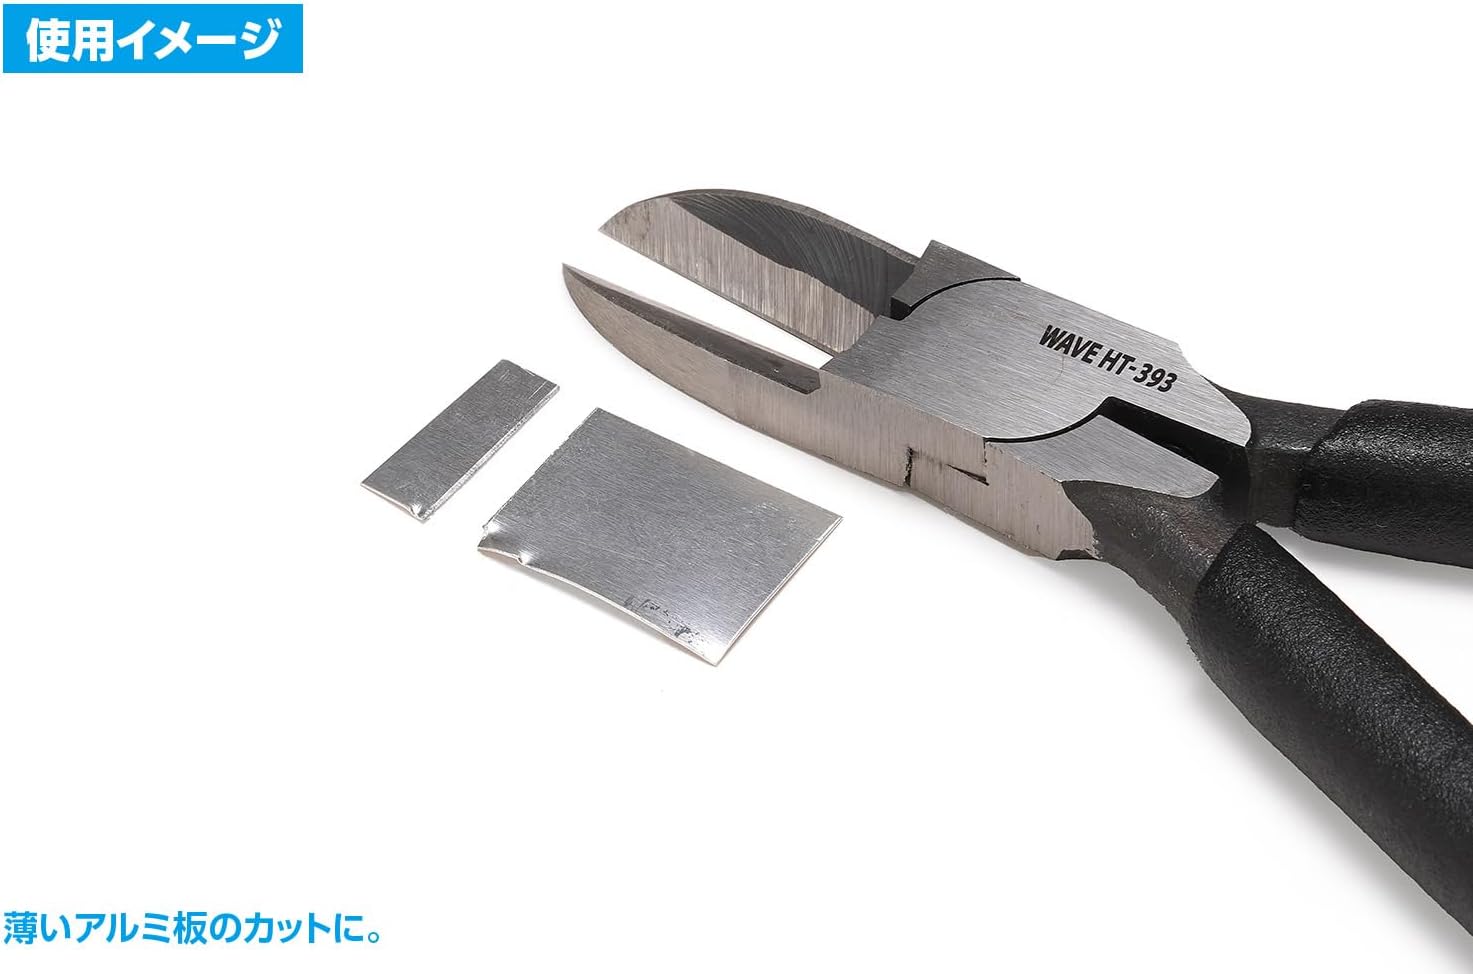 Wave HT-393 HG Long Blade Nipper [Flat Type] Nipper for Plastic Models - BanzaiHobby